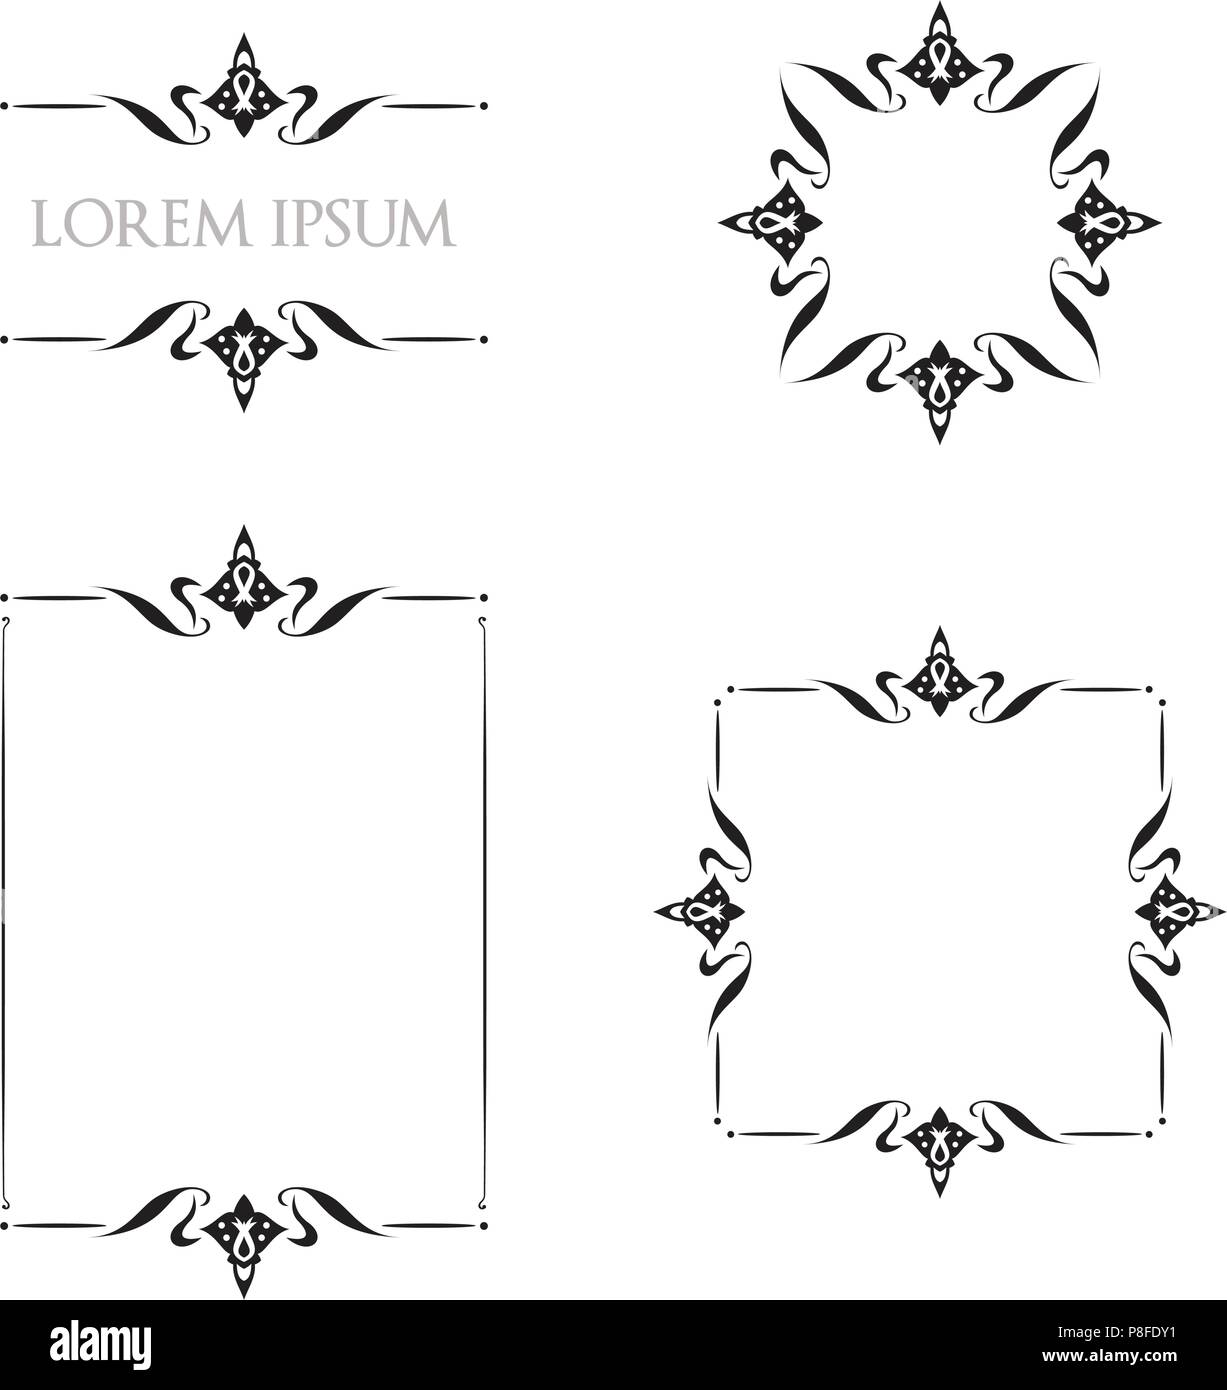 Simple Black Ornamental Decorative Frame Stock Vector (Royalty